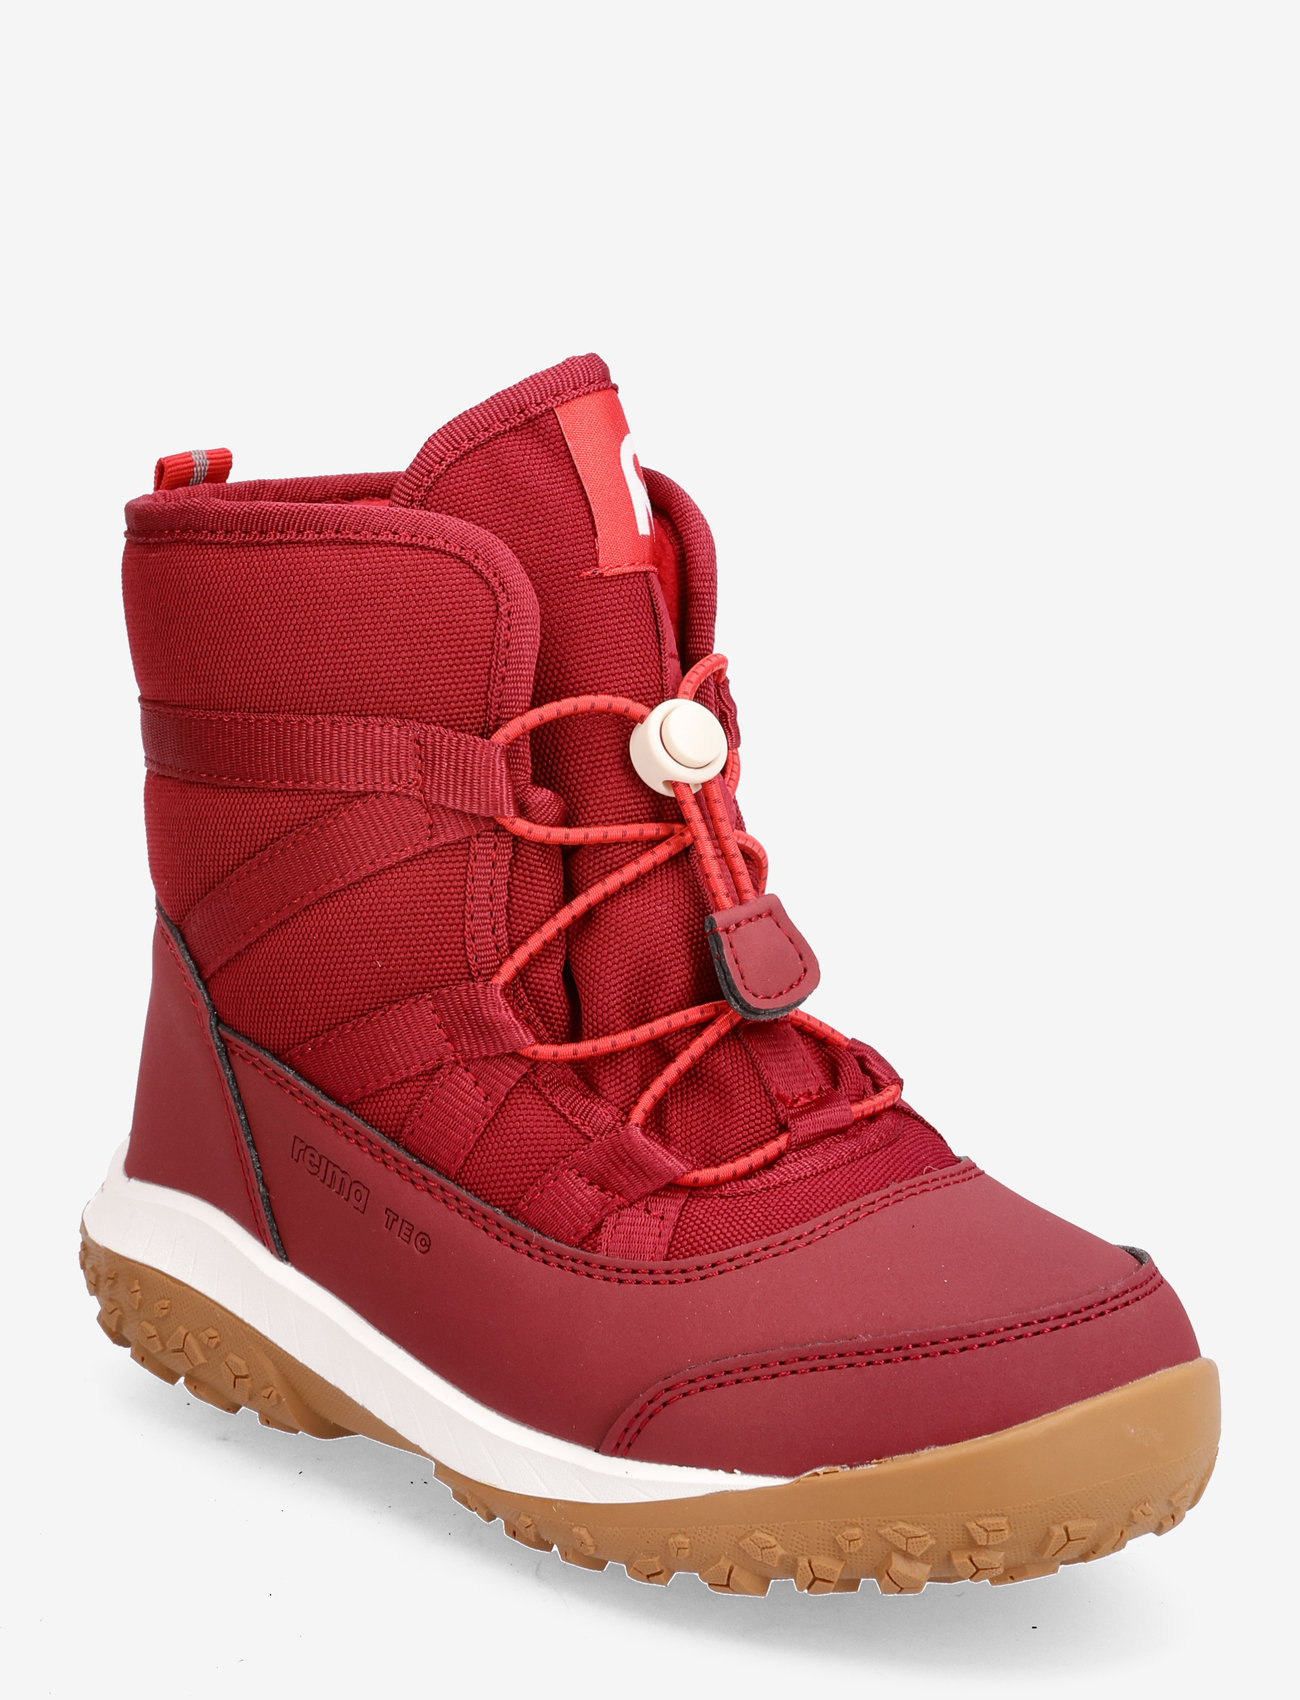 Reima - Reimatec winter boots, Myrsky - vaikams - jam red - 0